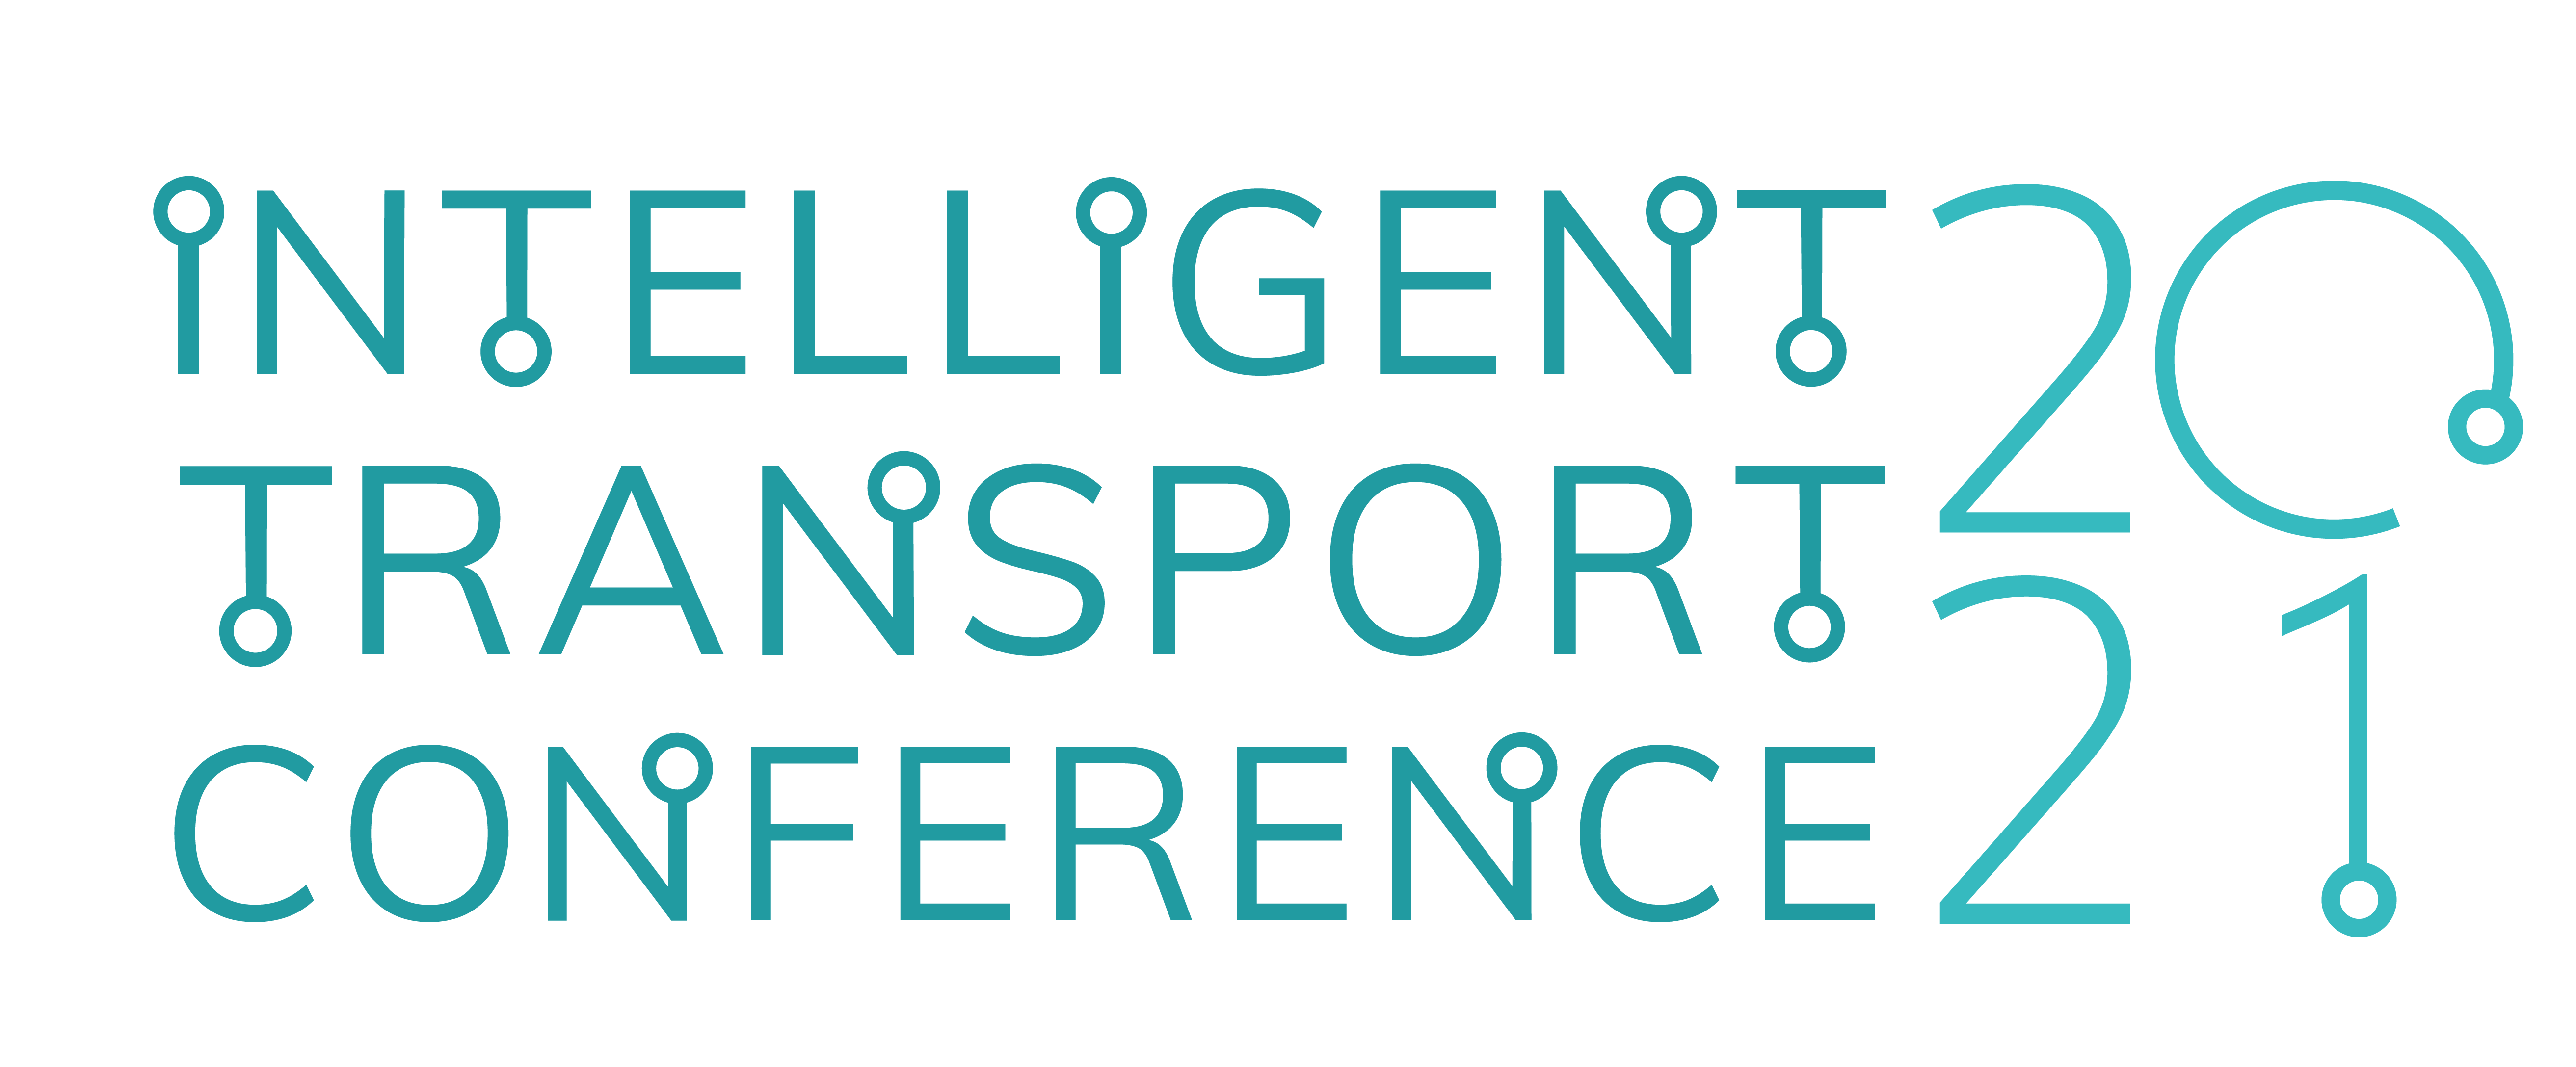 Intelligent Transport Conferences & Events